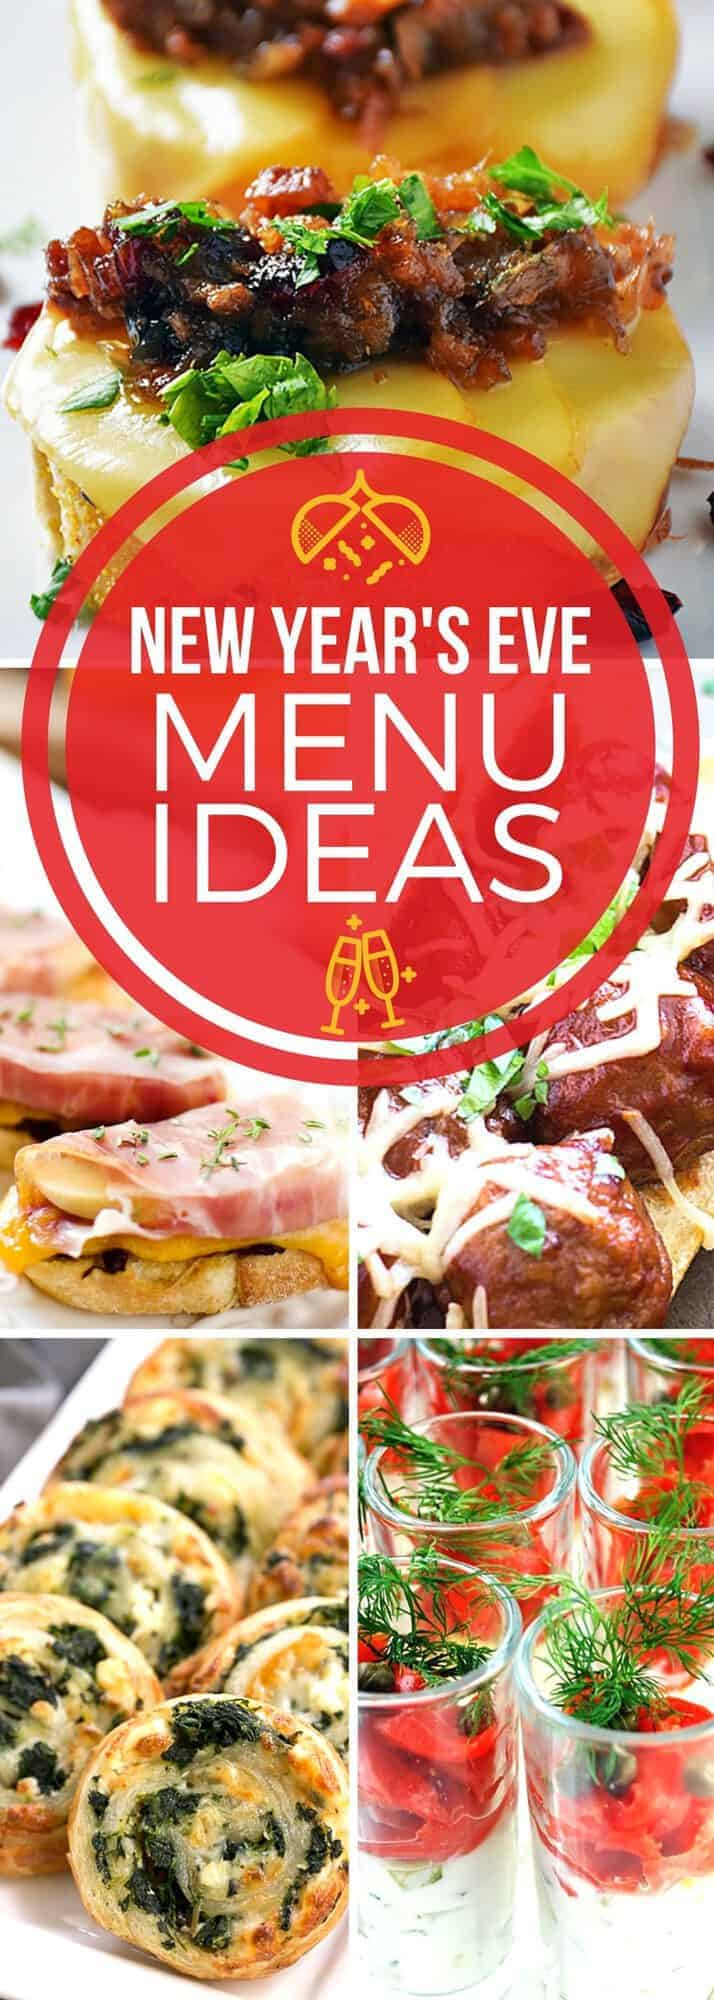 New Year'S Eve Dinner Party Menu Ideas
 New Year s Eve menu ideas SundaySupper